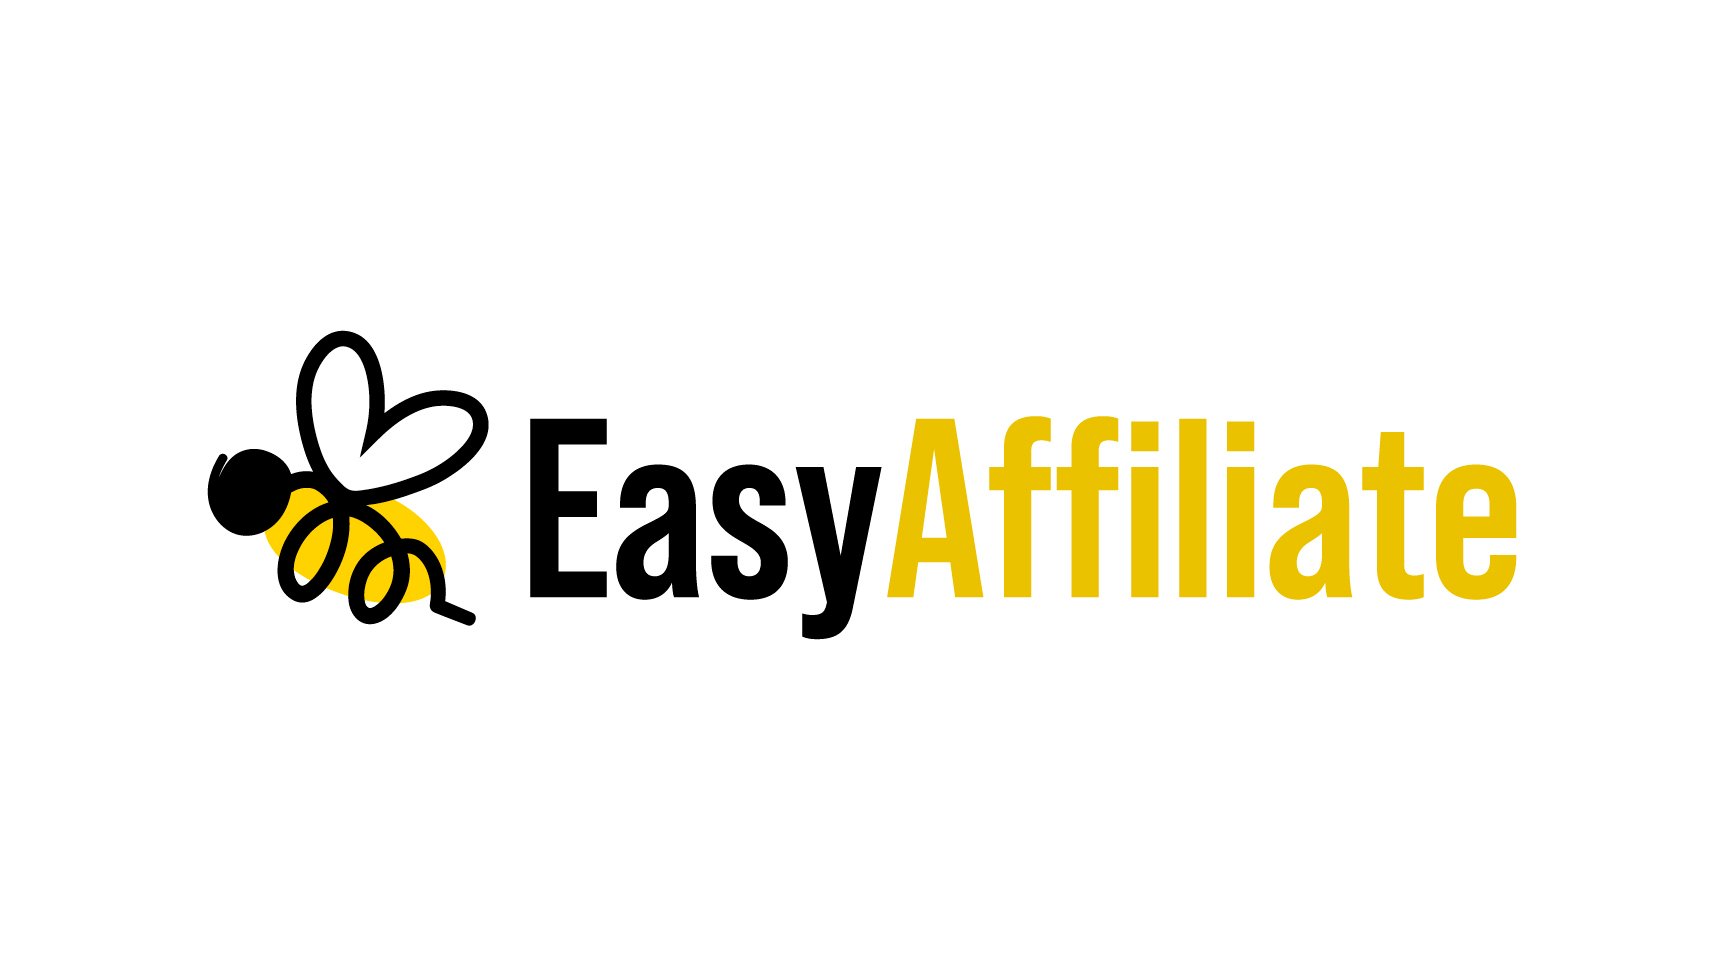 Easy Affiliate logo